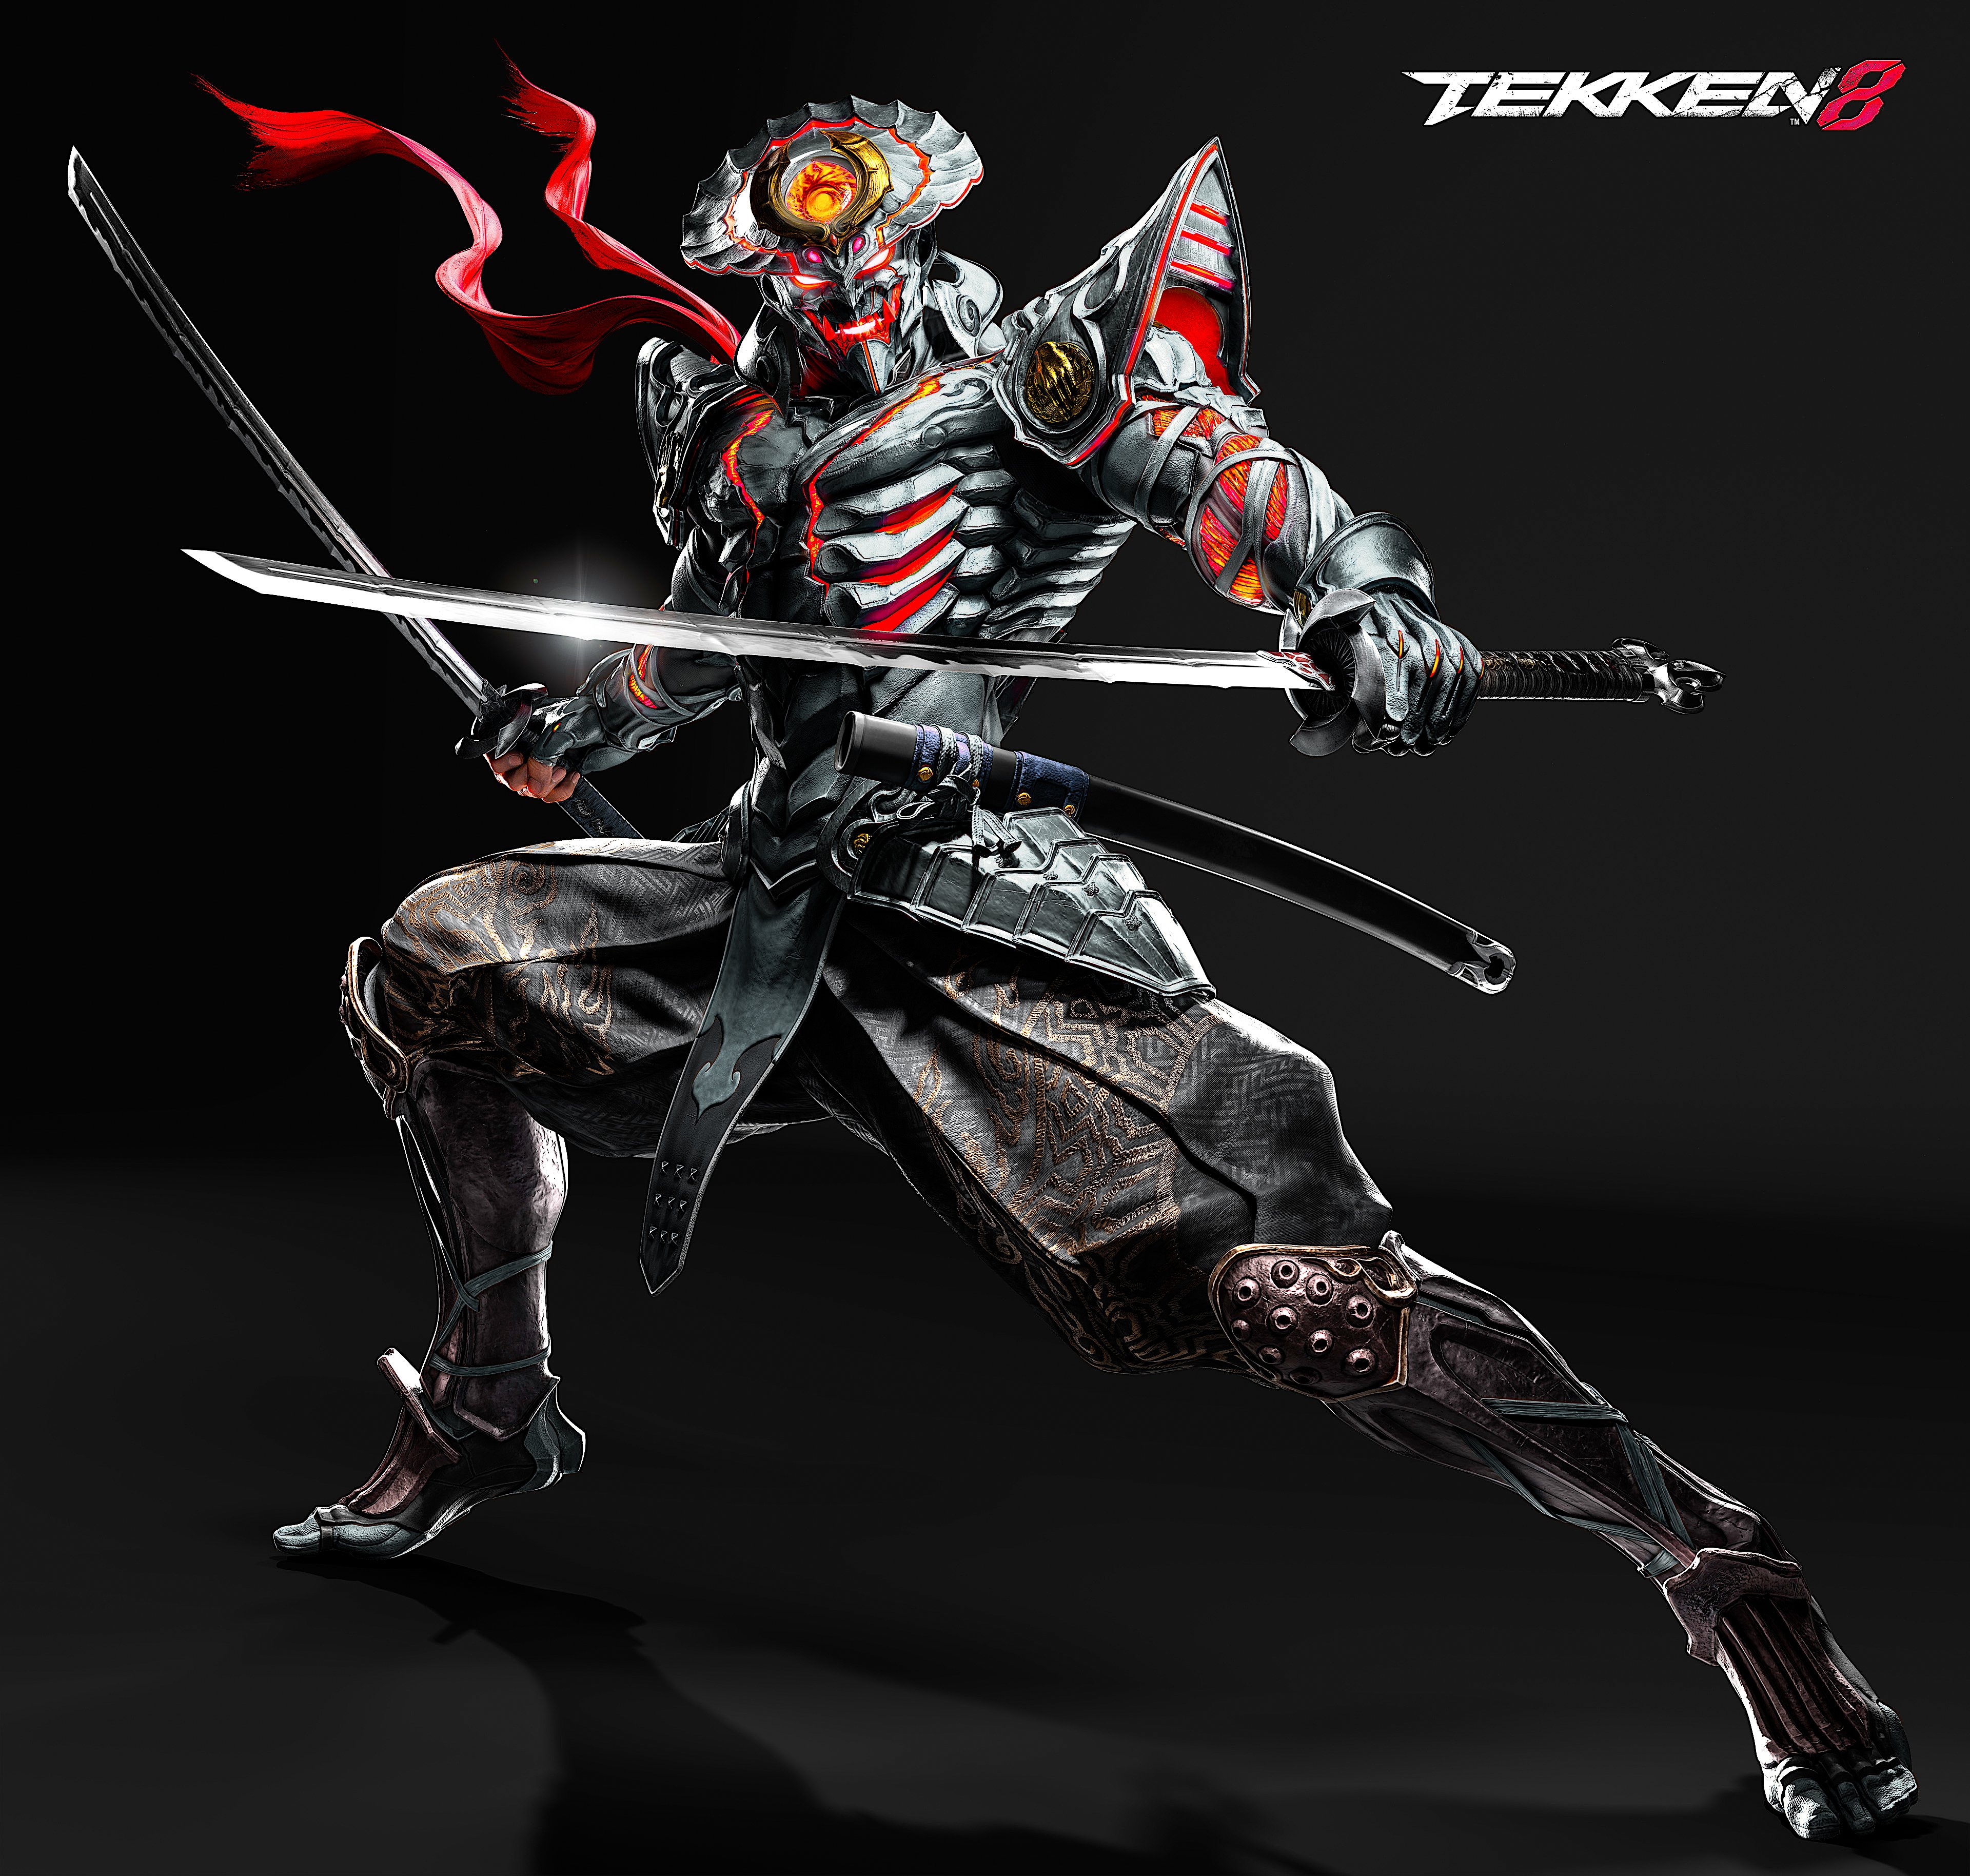 Tekken 8: Yoshimitsu aparece em novo trailer frenético 